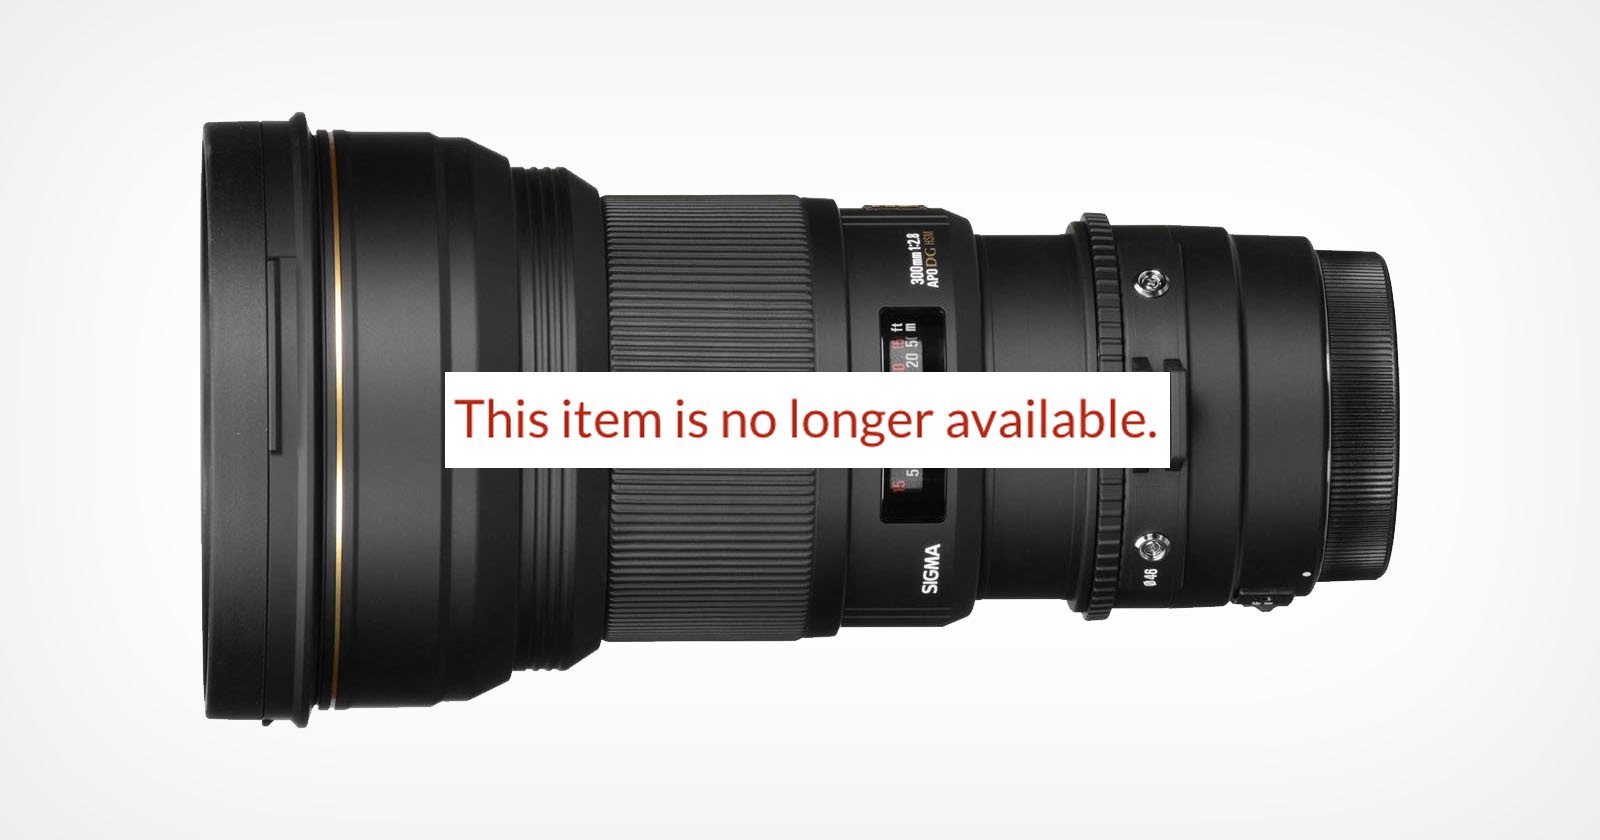 Sigma Has Discontinued 18 DSLR Lenses